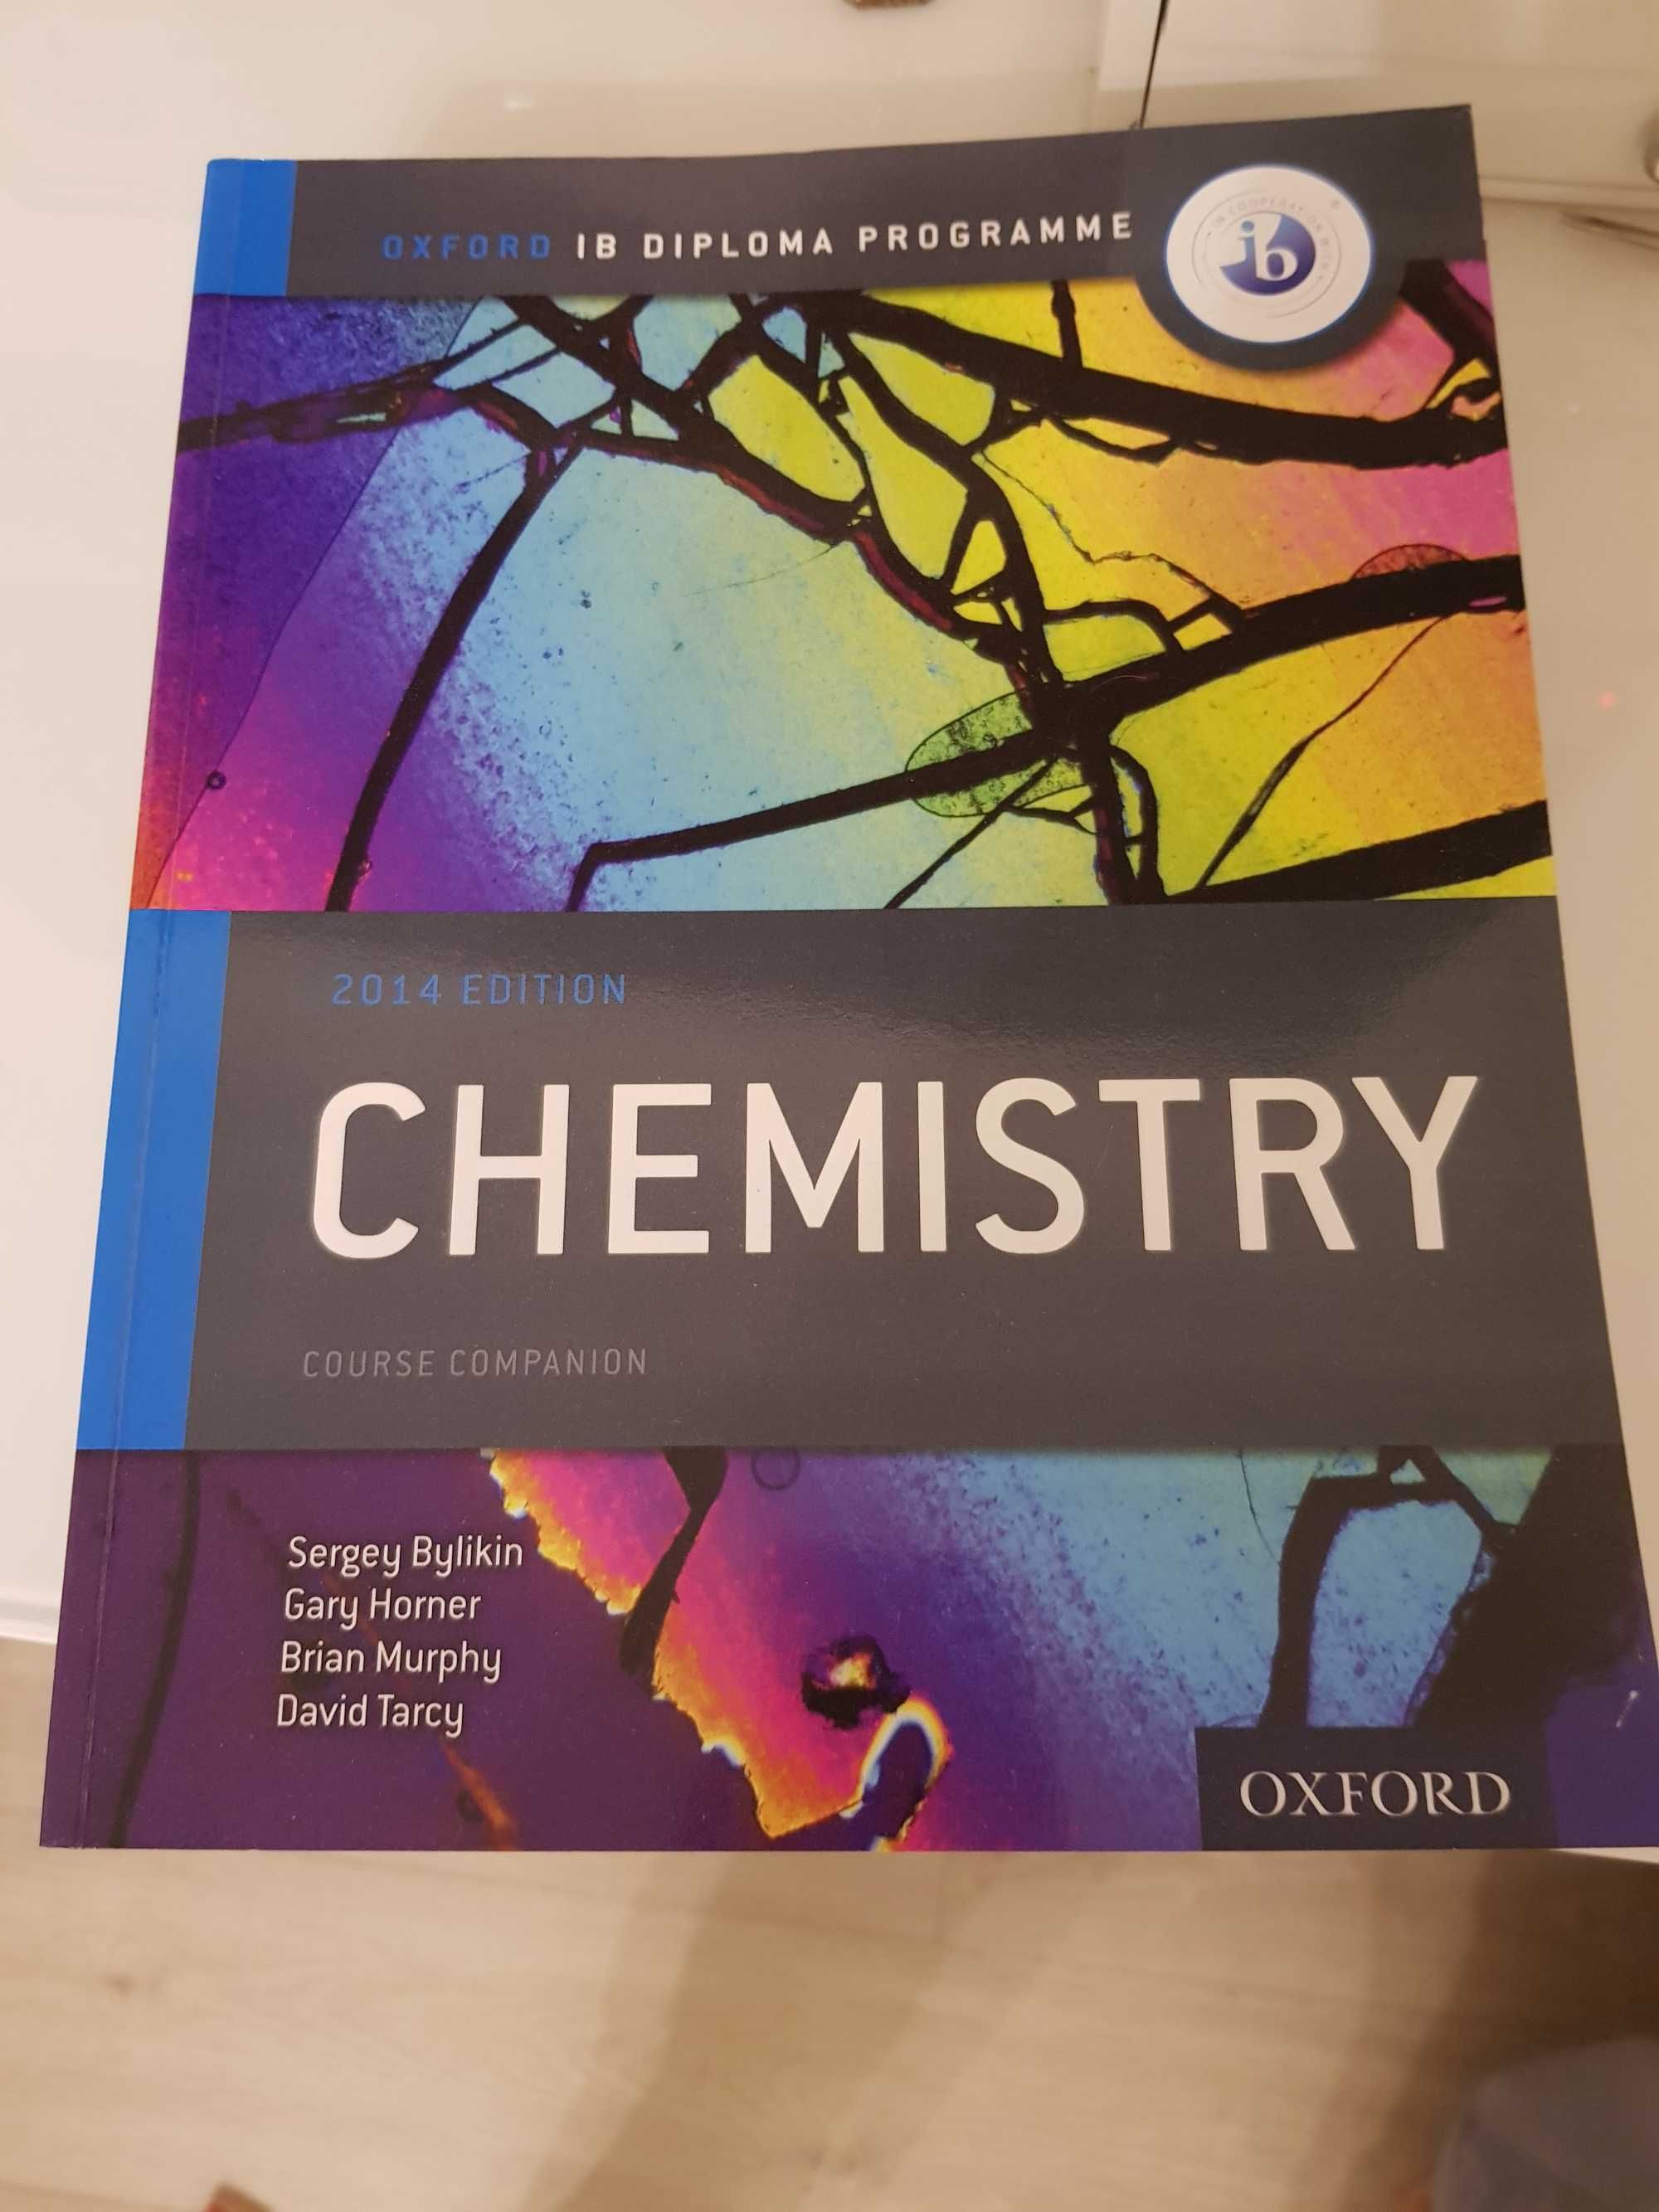 Chemistry course companion. Oxford Edition